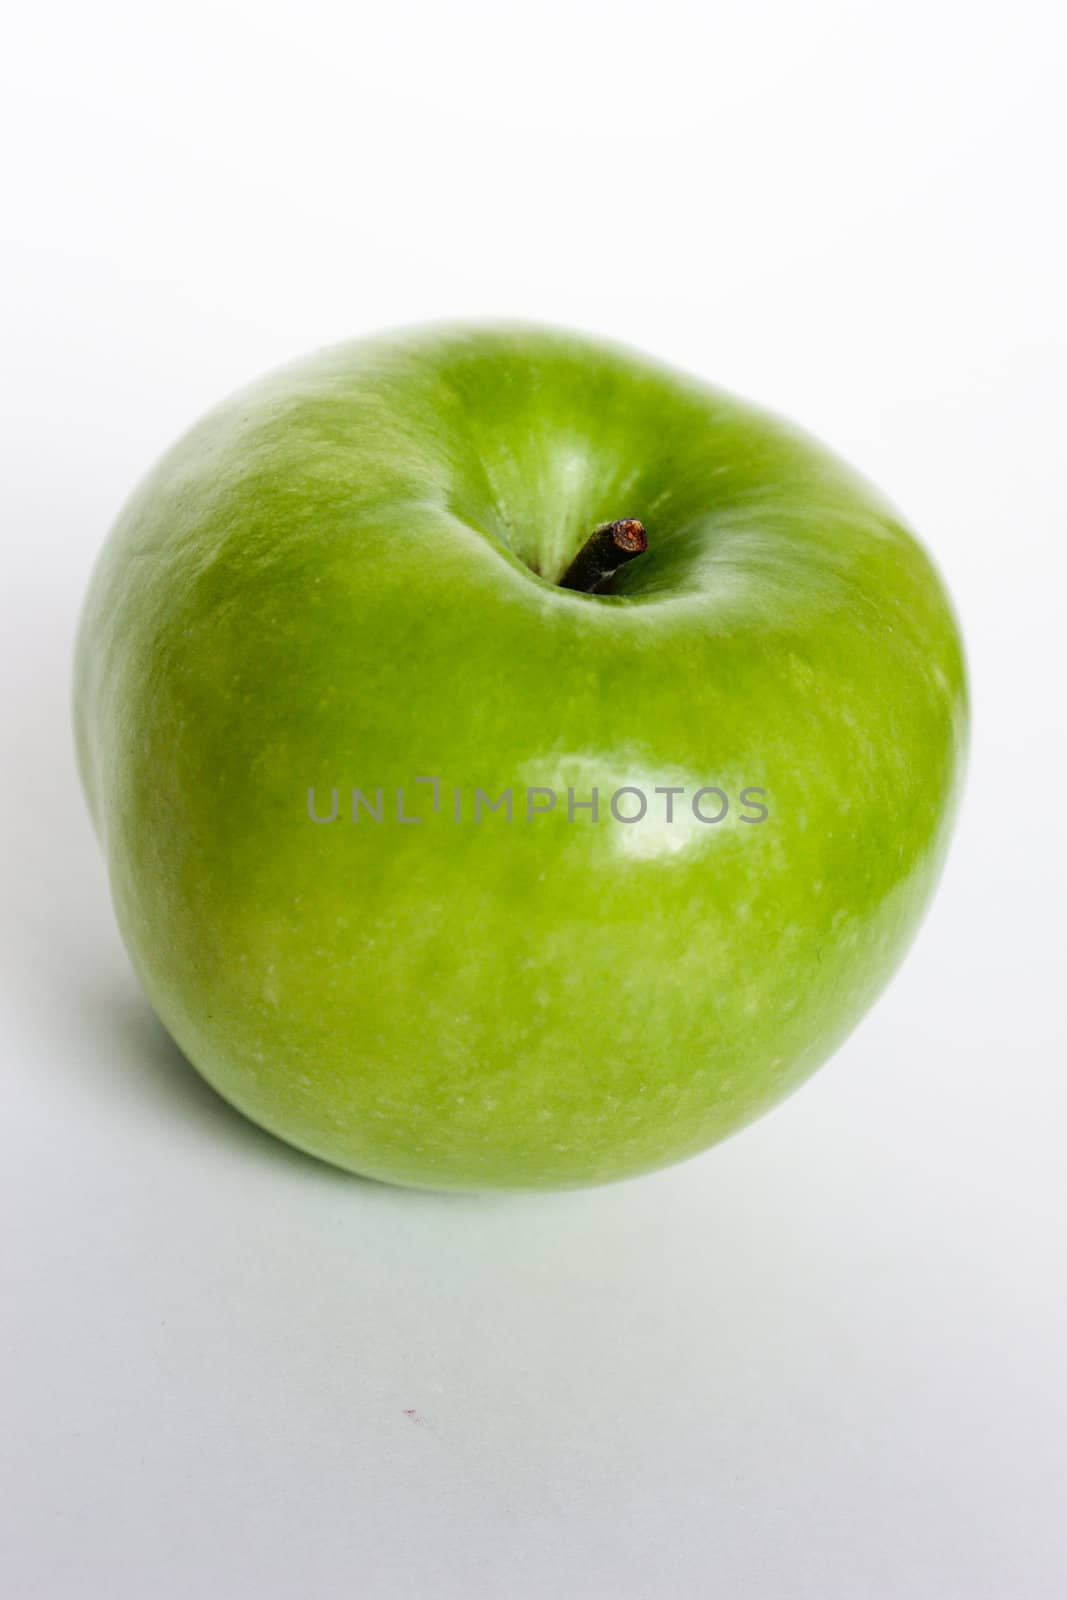 green apple, ripe apple, juicy apple, shiny apple, apple diet, apple day, a new crop, program lose weight, fruit